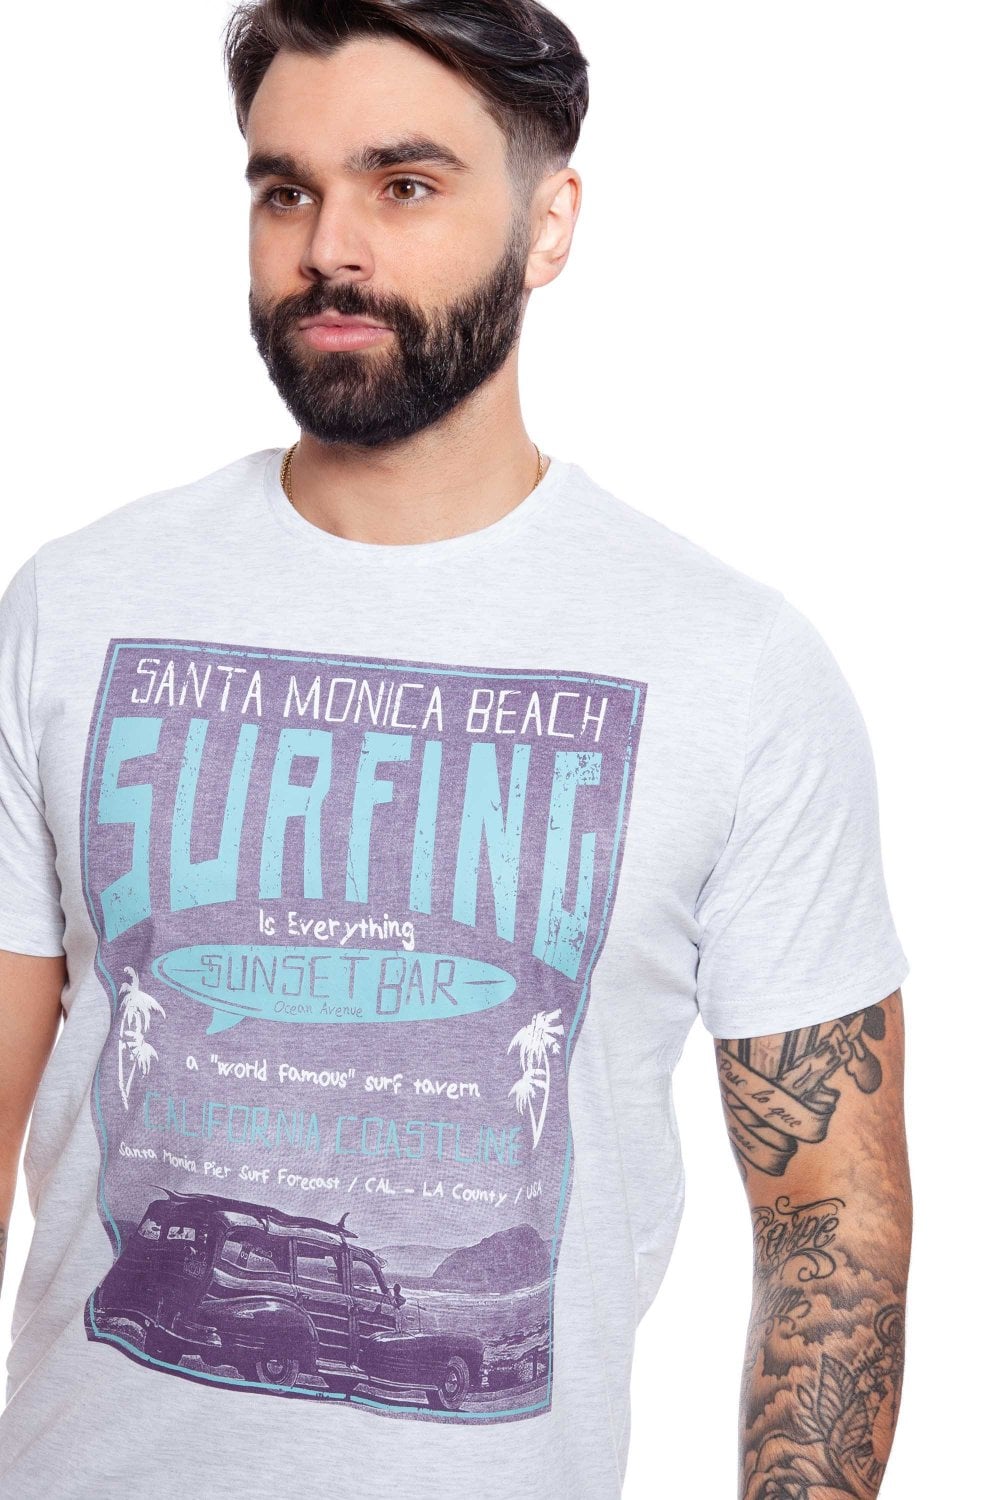 Sunset Bar T-Shirt